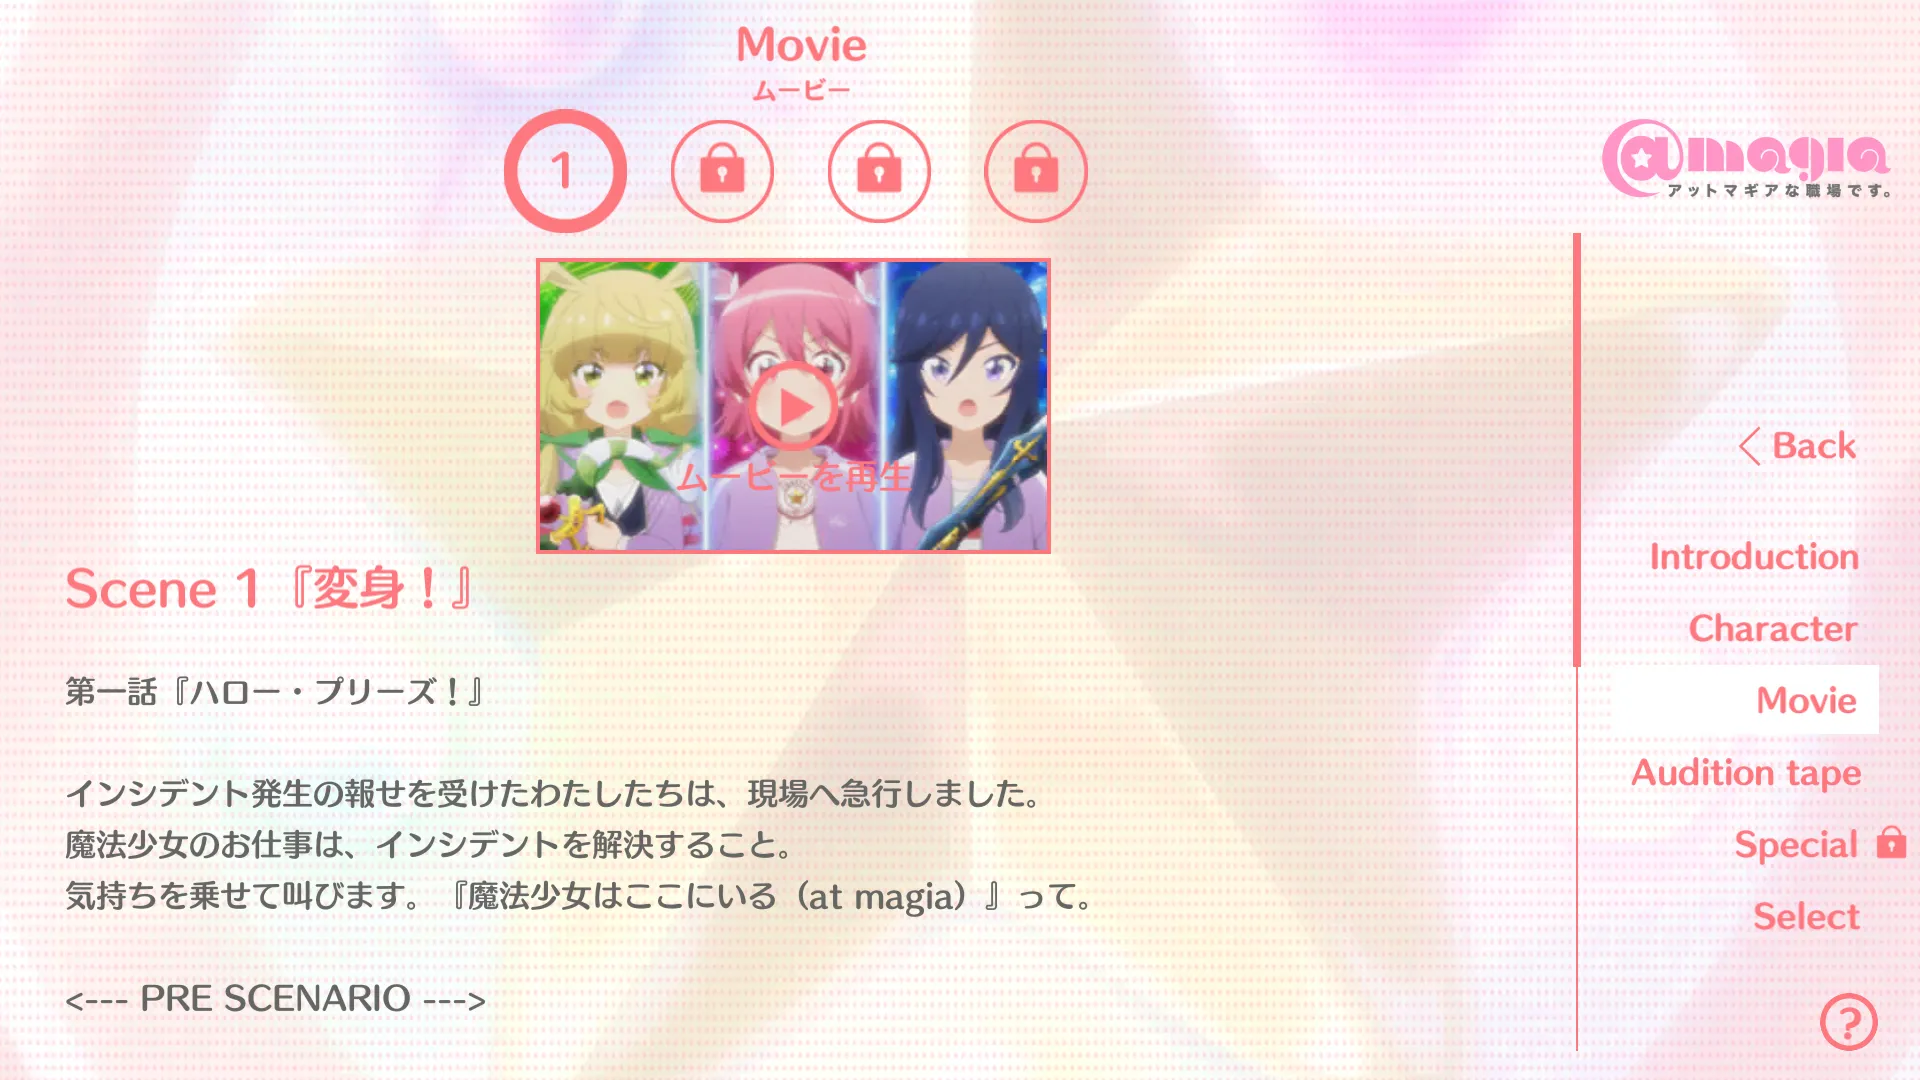 Anime information screen